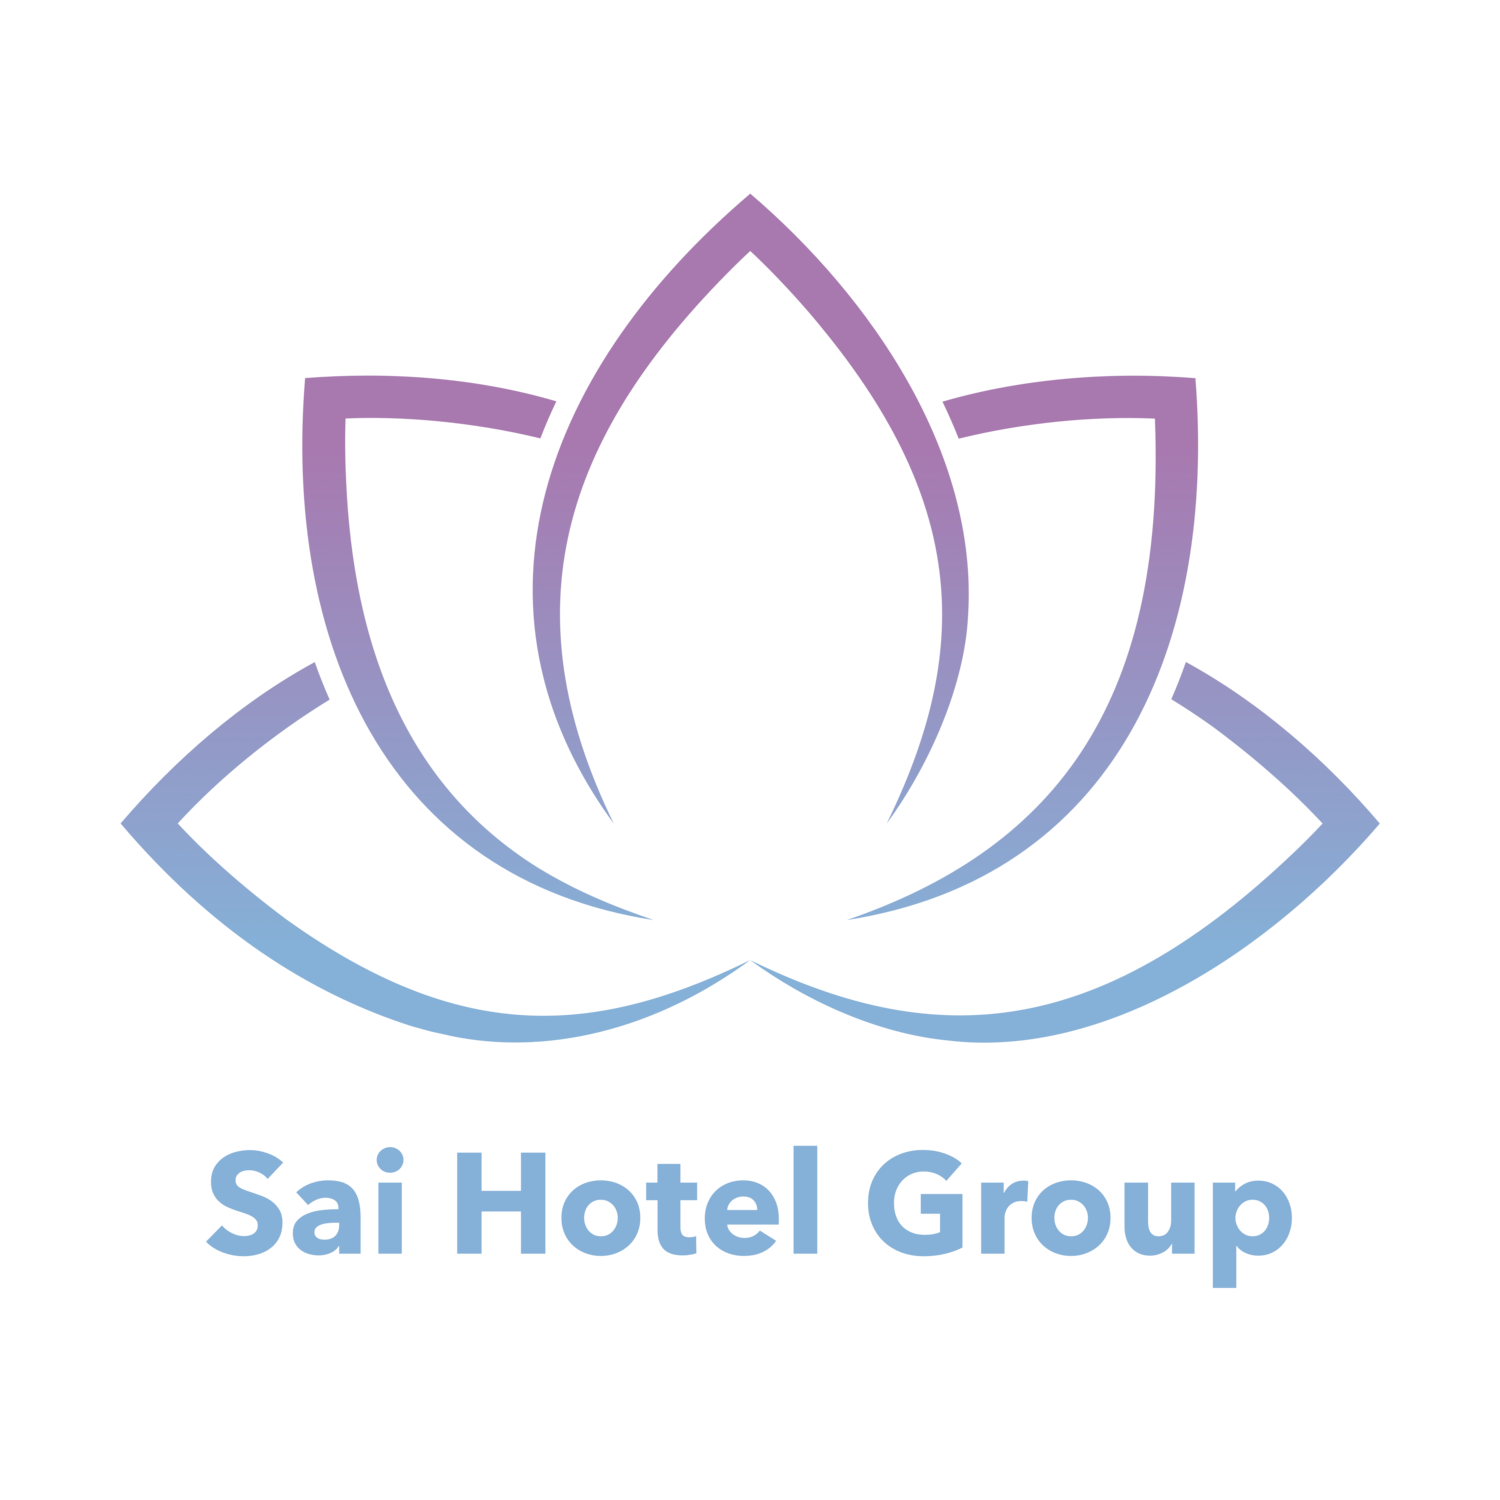 Sai Hotel Group